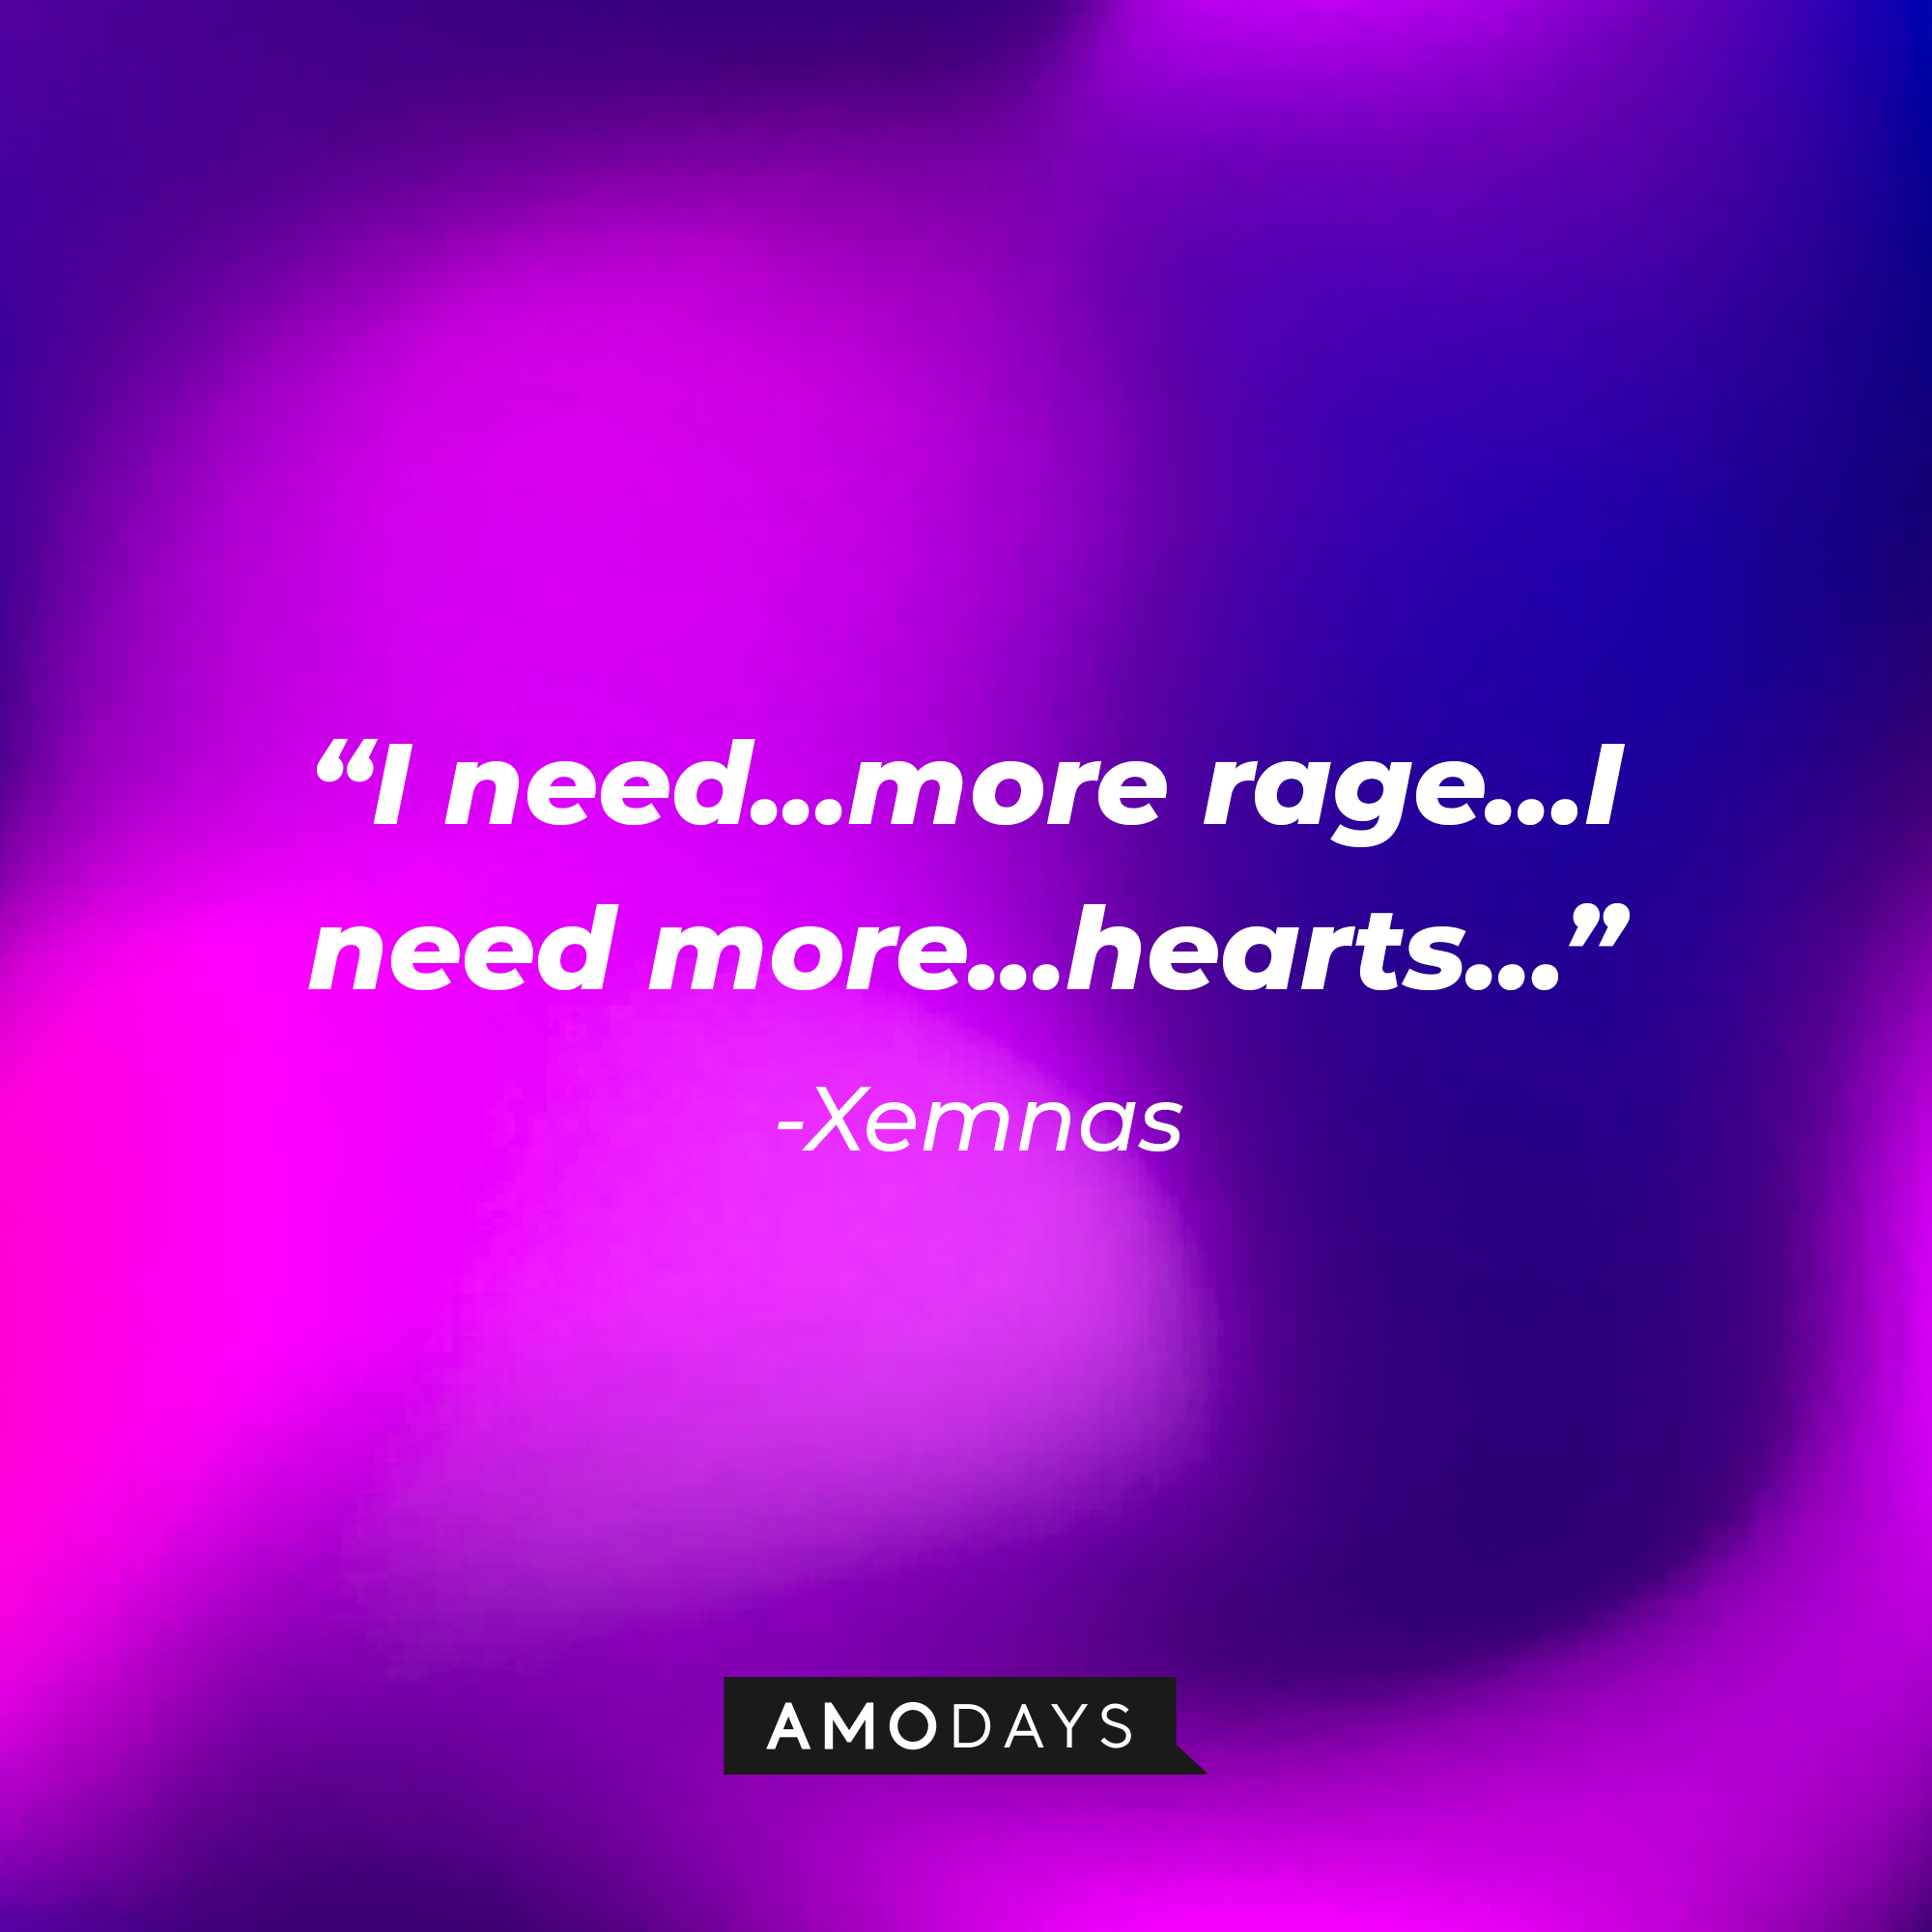 Xenmas’ quote: “I need...more rage…I need more...hearts…”  | Source: AmoDays